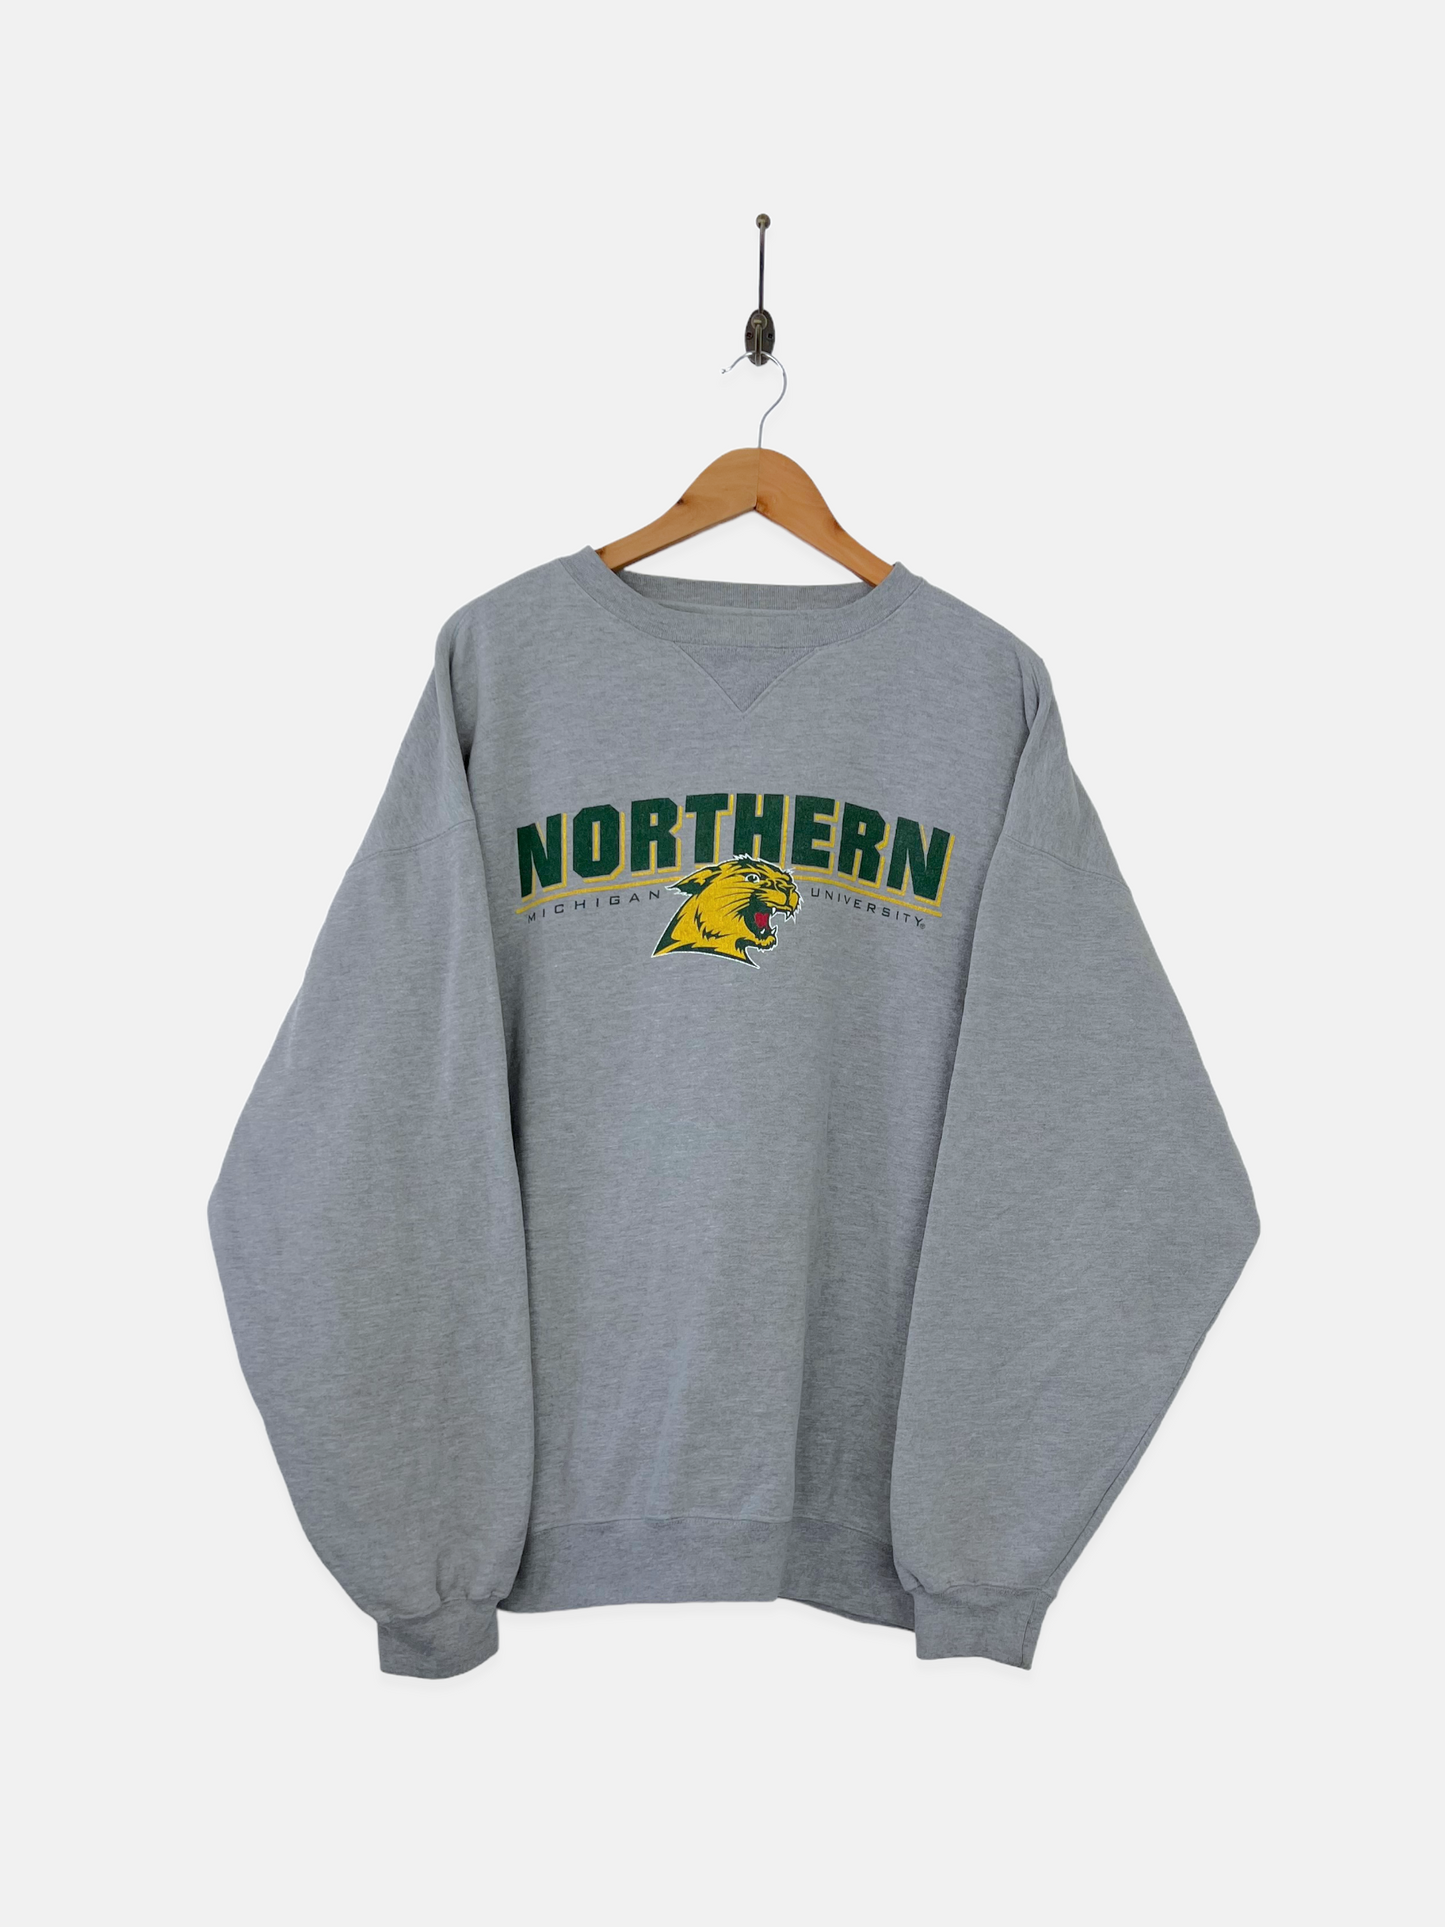 90's Northern Michigan University Vintage Sweatshirt Size L-XL